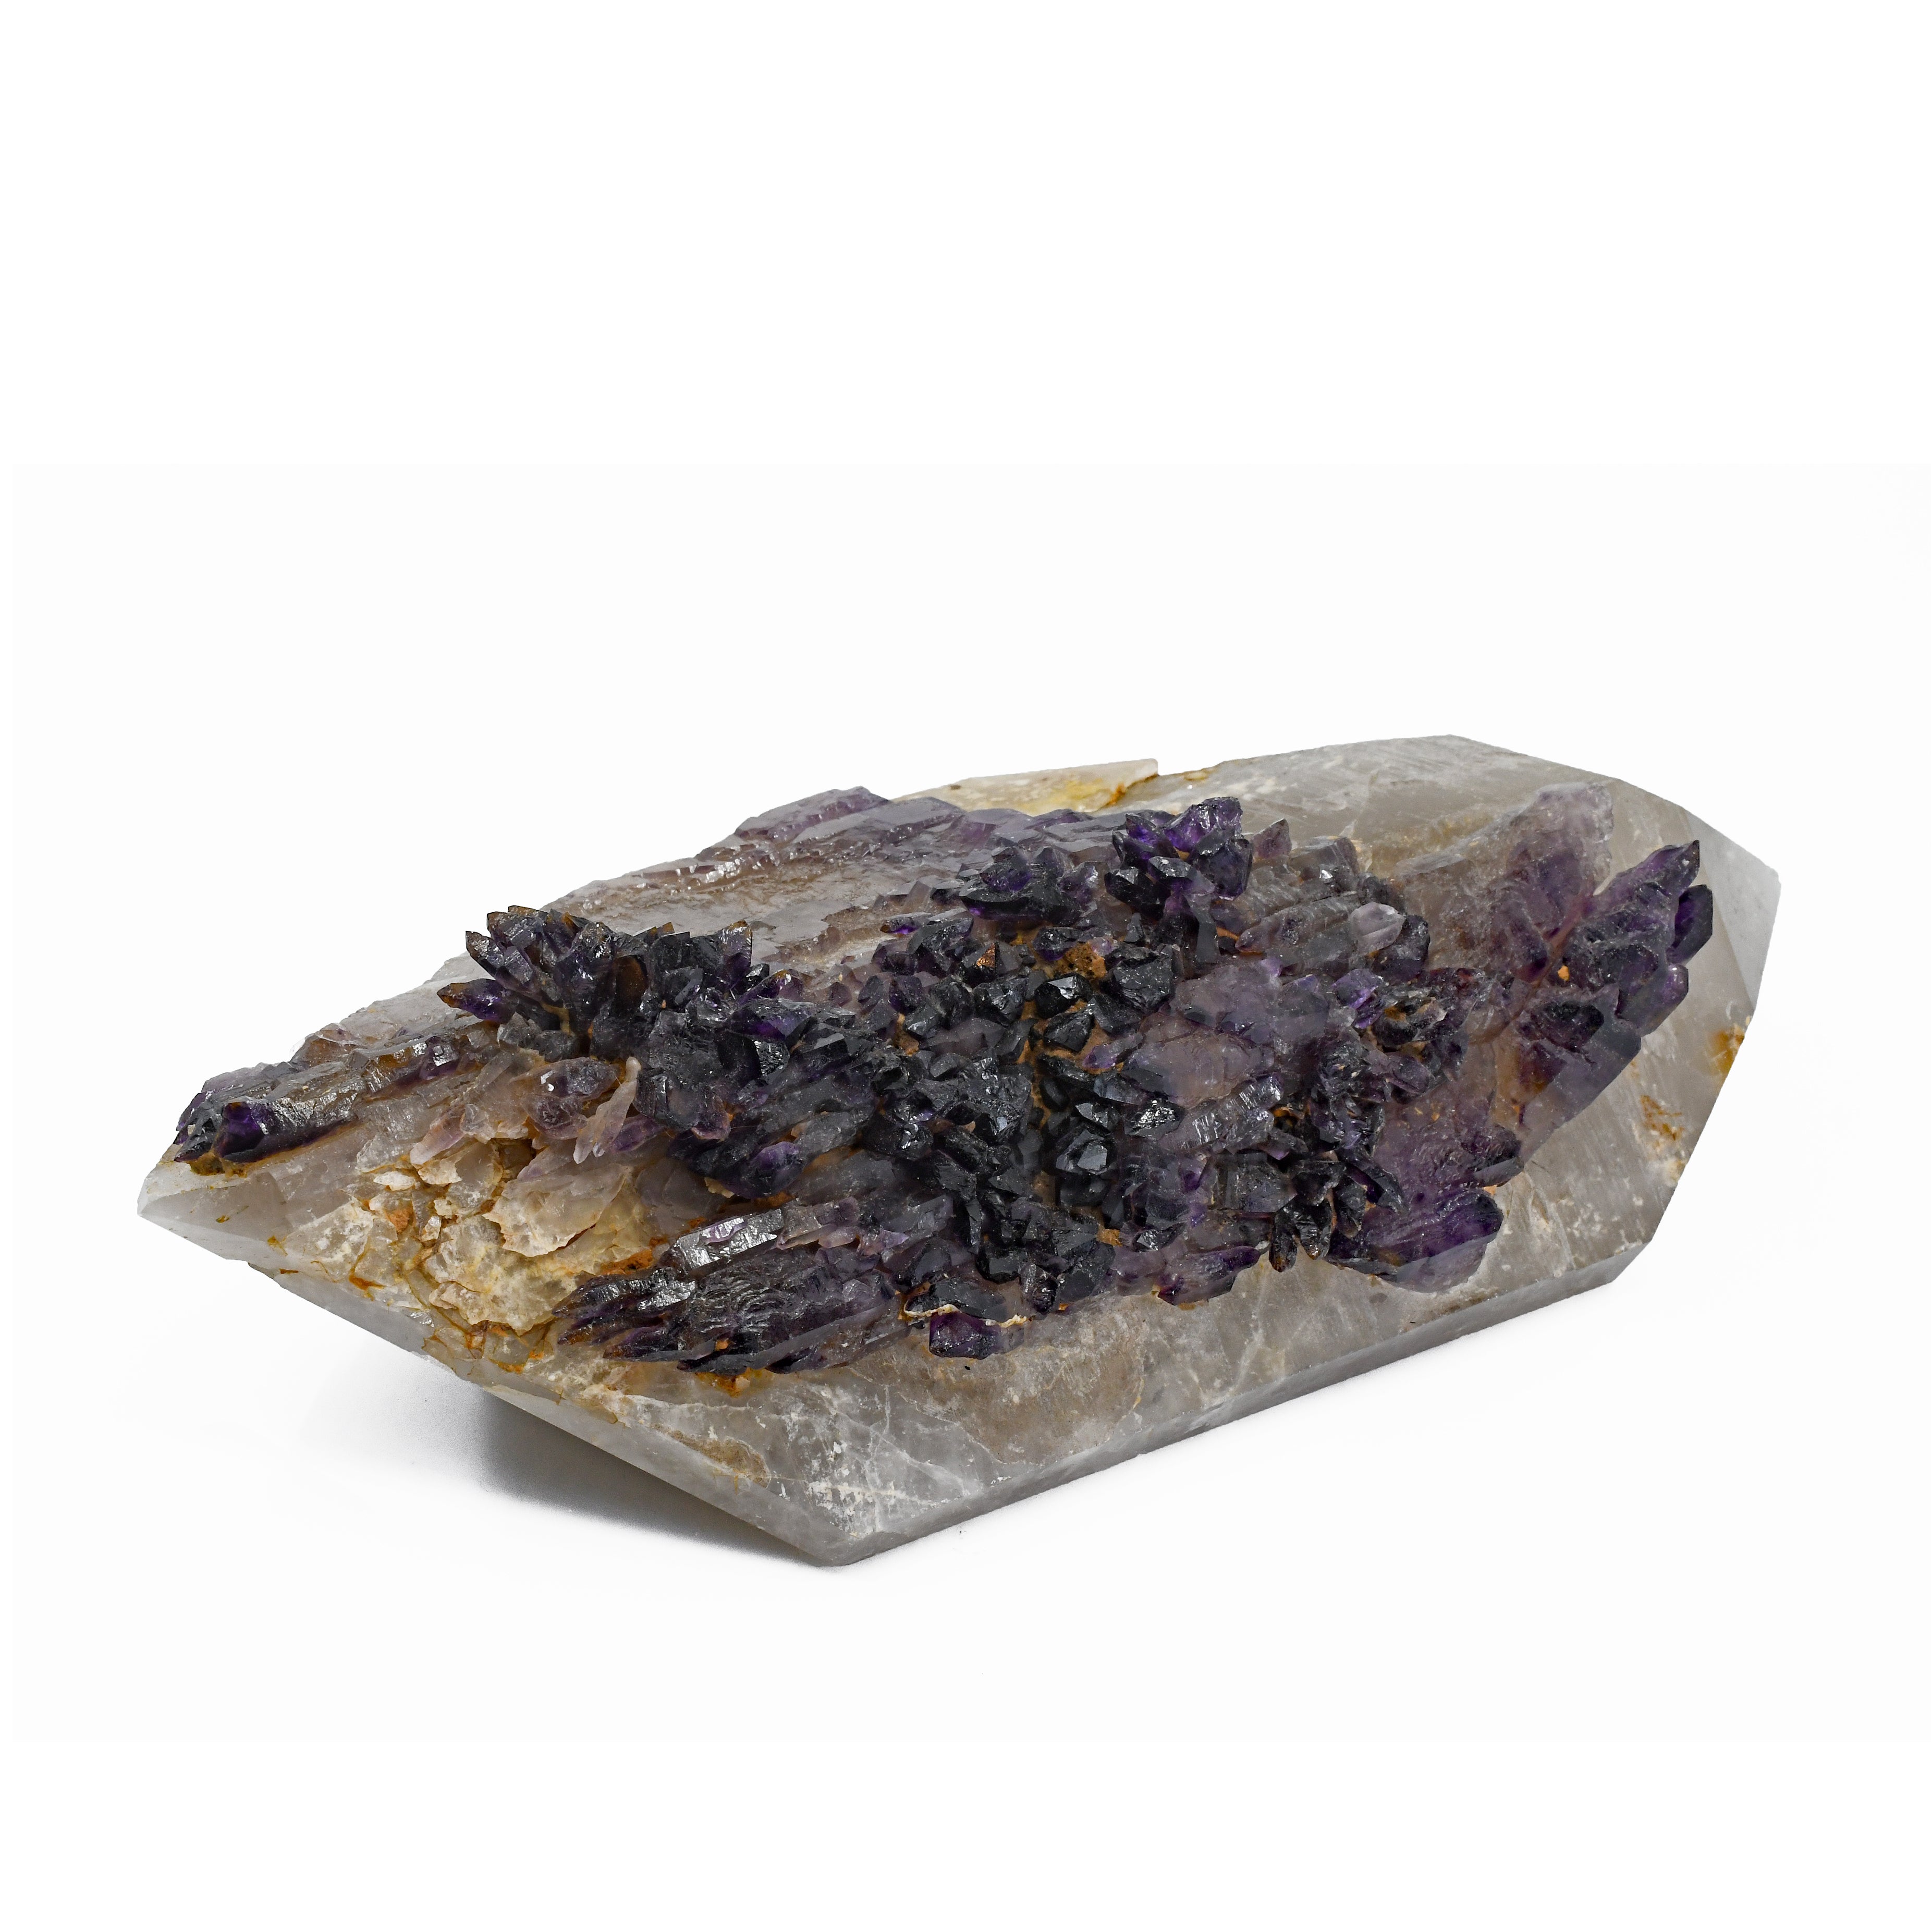 Amethyst 10 inch 4.05 lb Elestial on Quartz Natural Crystal Specimen - Brazil - GGH-211 - Crystalarium